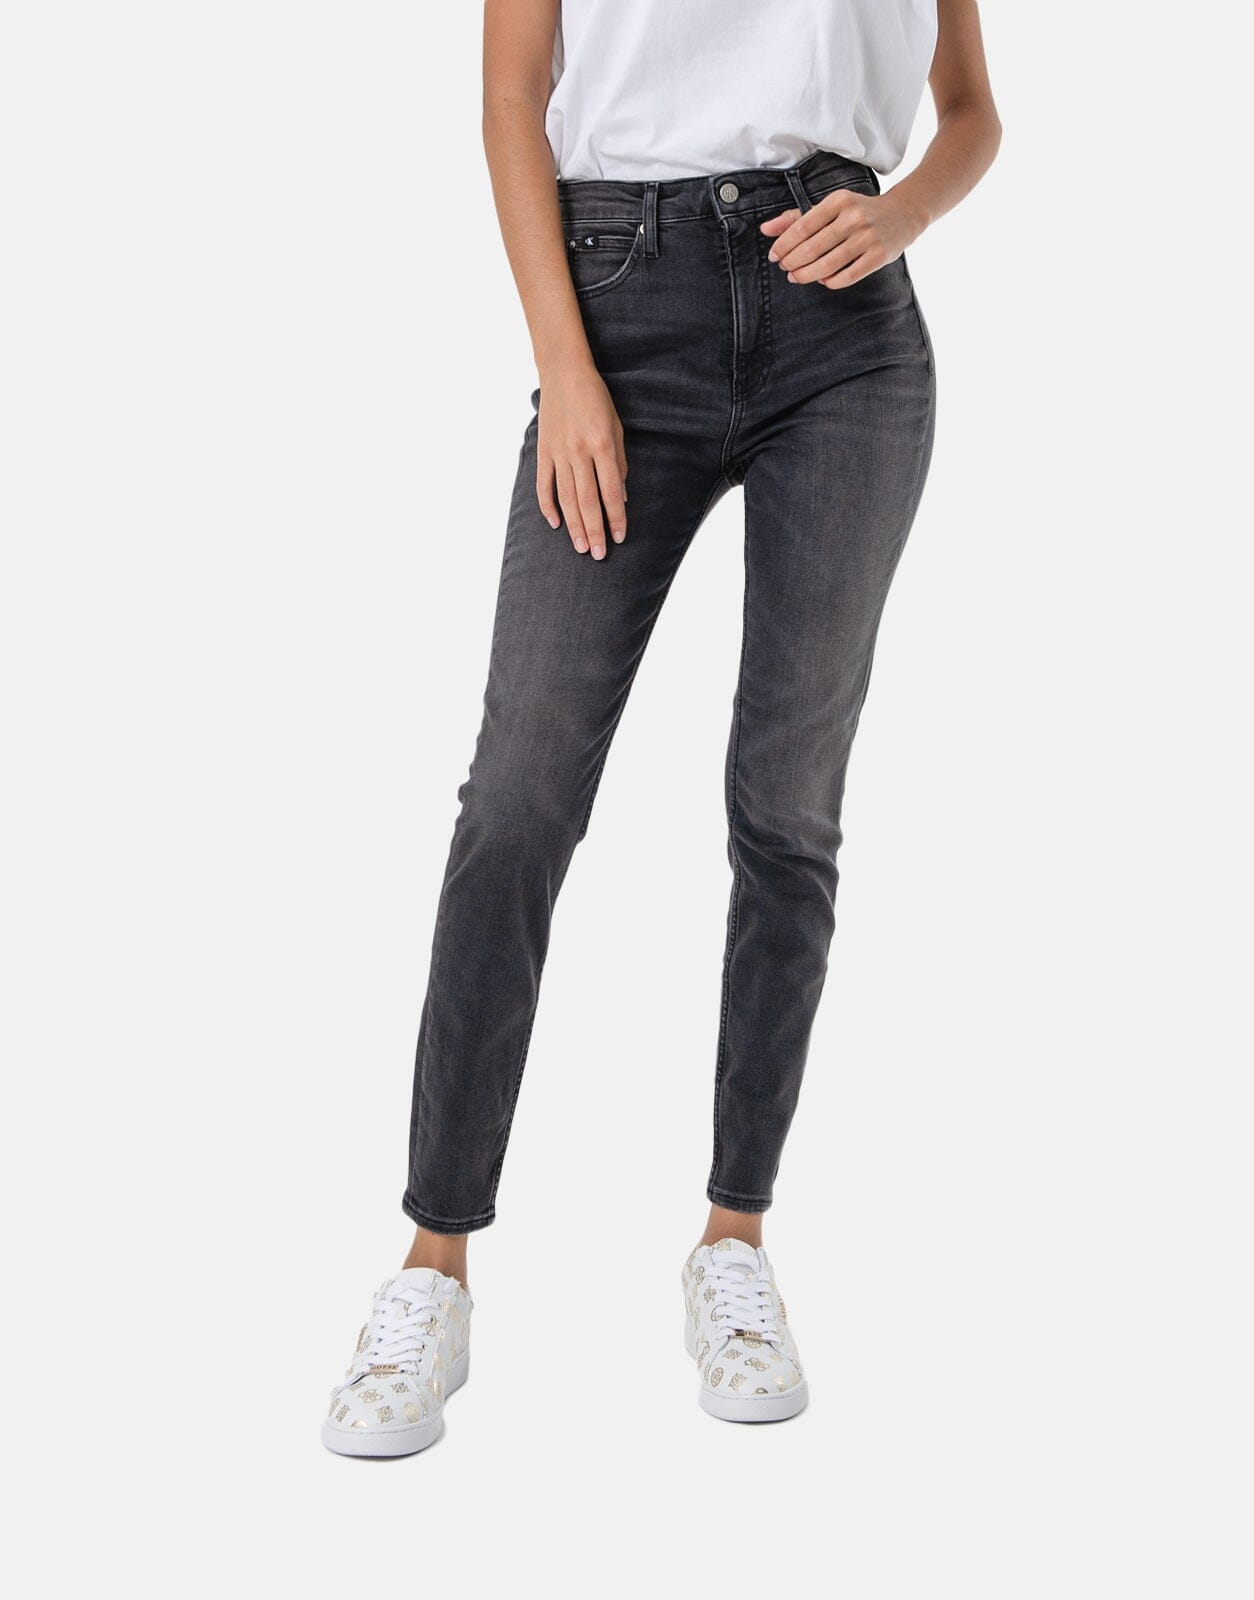 Calvin Klein High Rise Super Skinny Black Jeans - Subwear